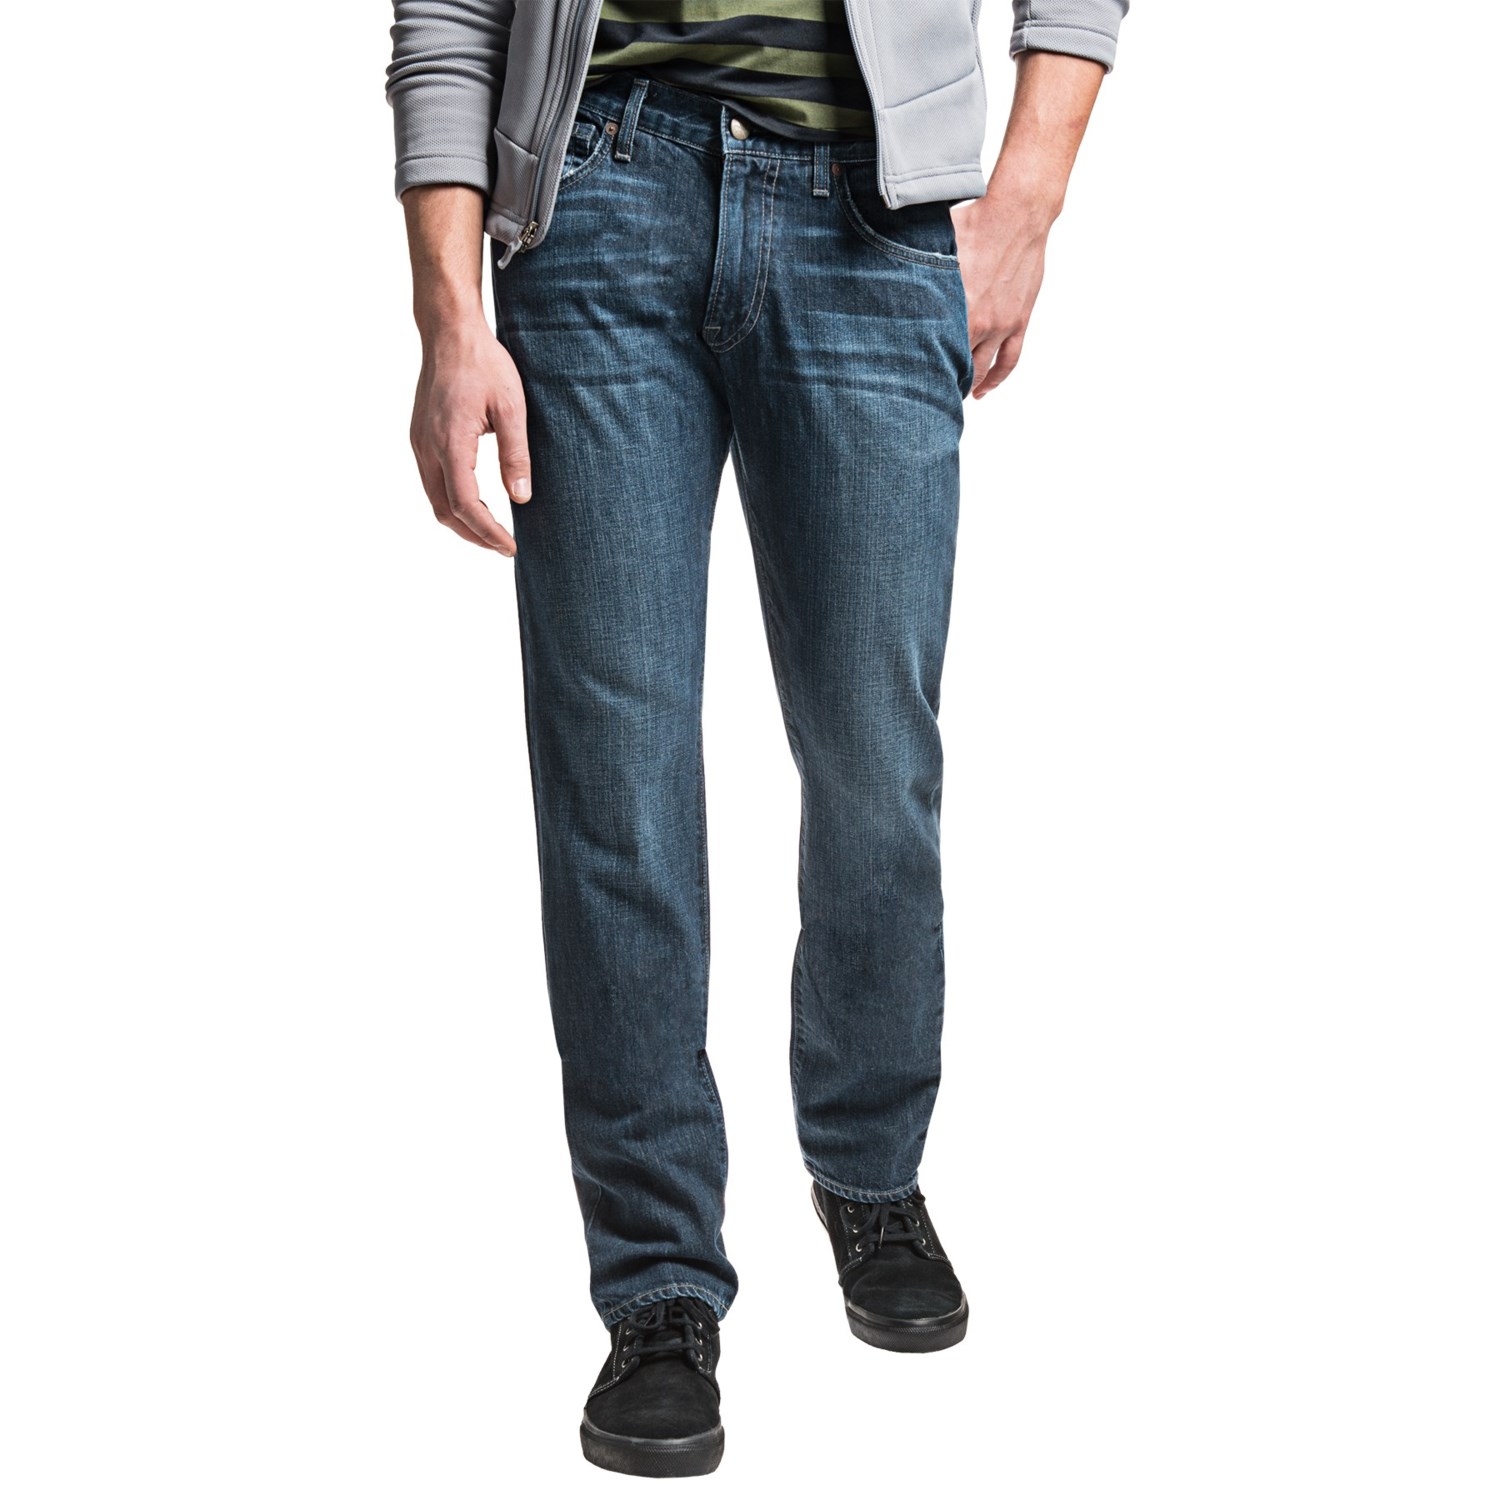 Agave Denim Classic Fit Jeans (For Men)